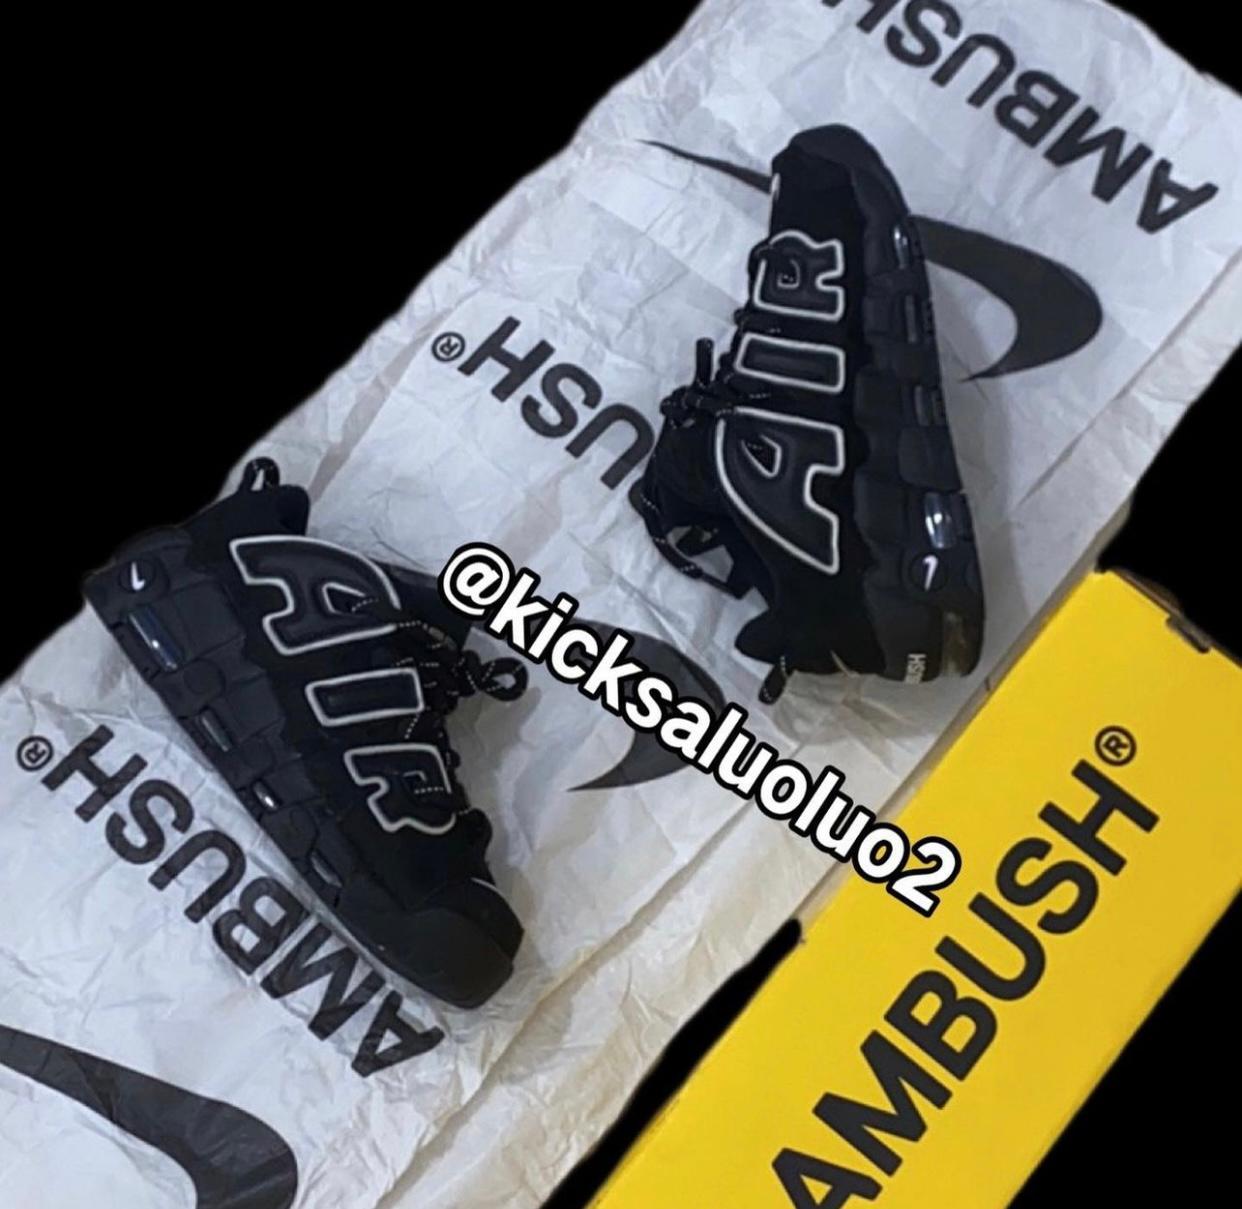 AMBUSH x Nike Air More Uptempo Low-Top